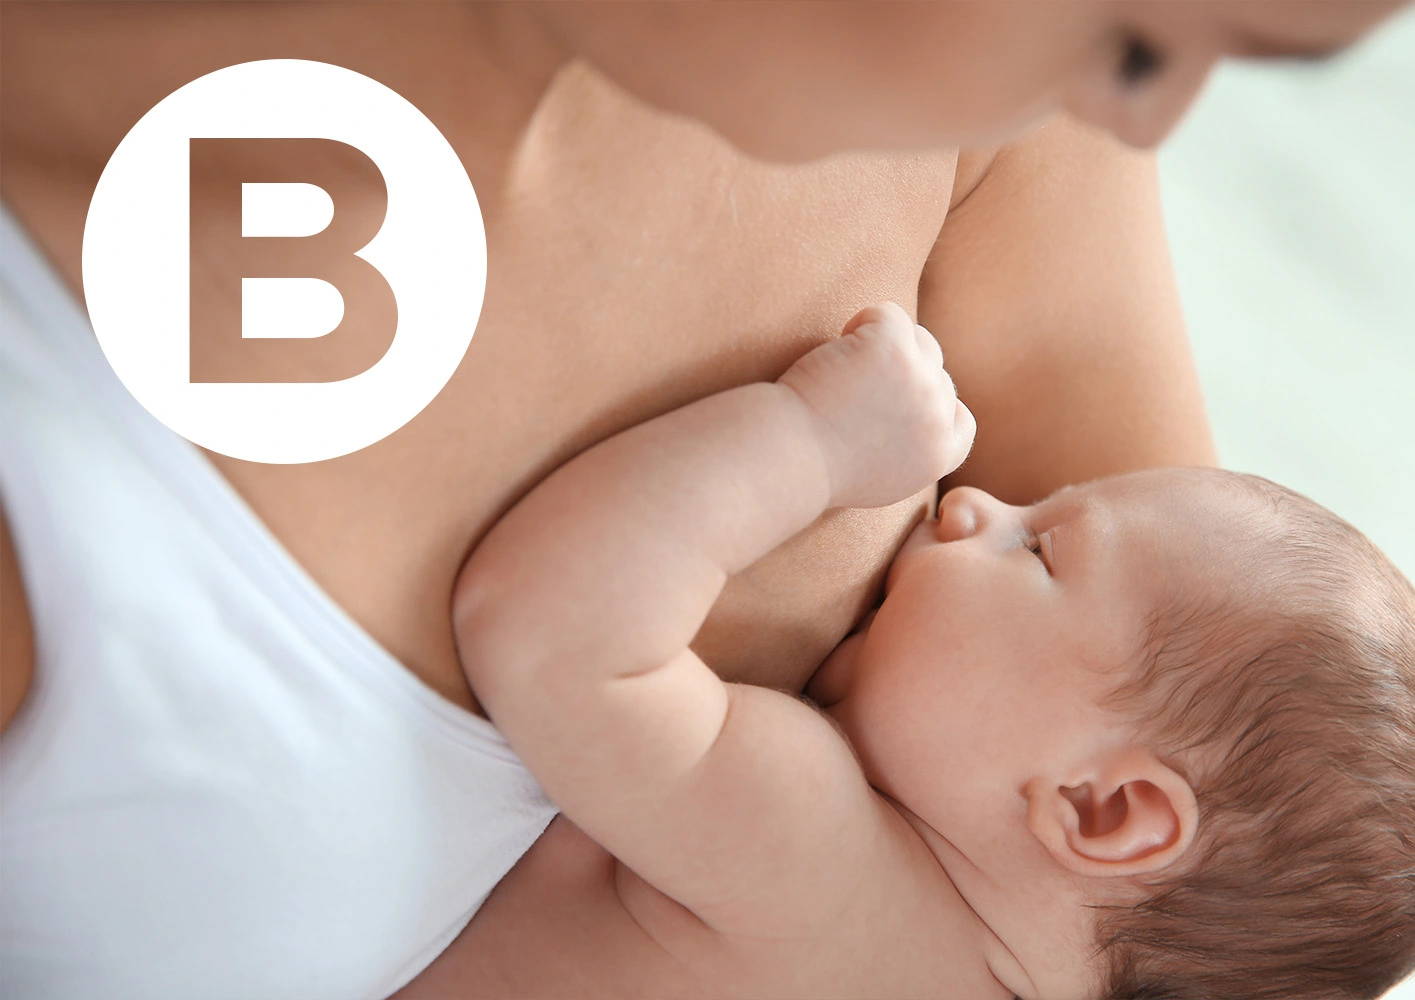 Letter B / Woman breastfeeding child